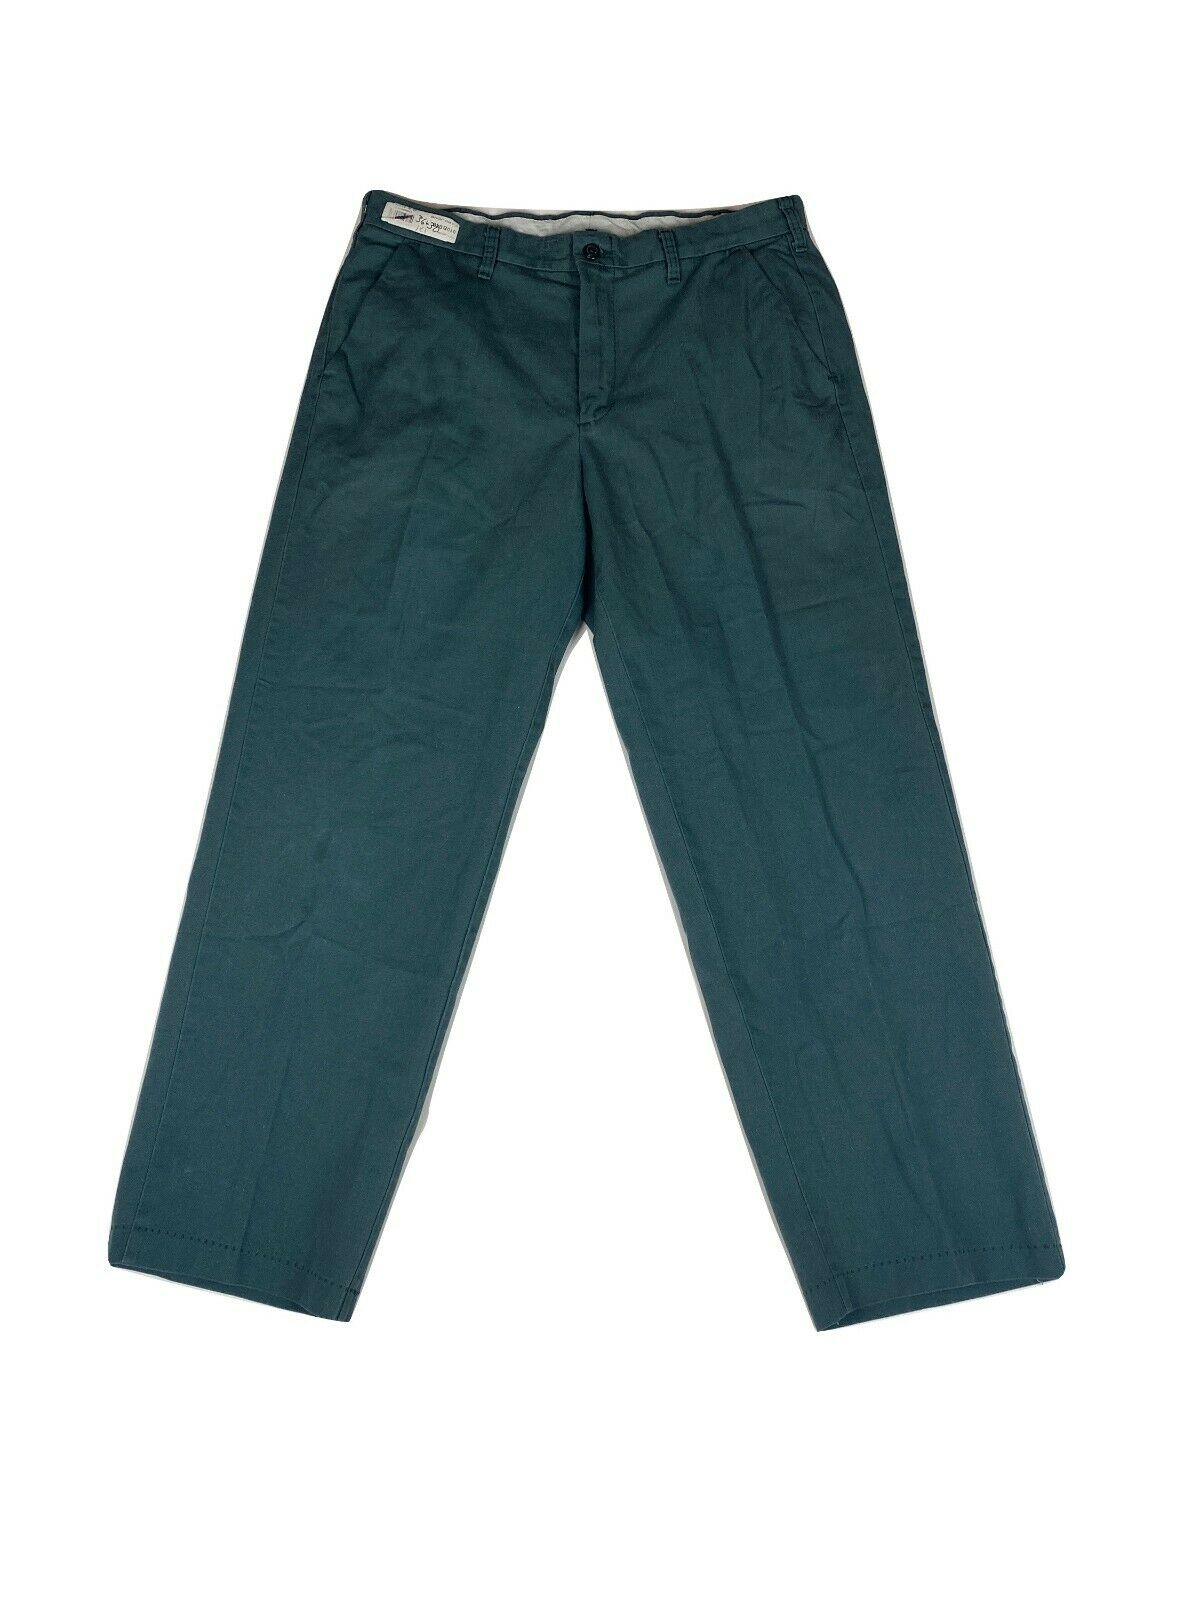 Green Work Pants - Red Kap - Used Uniform - Landscaping